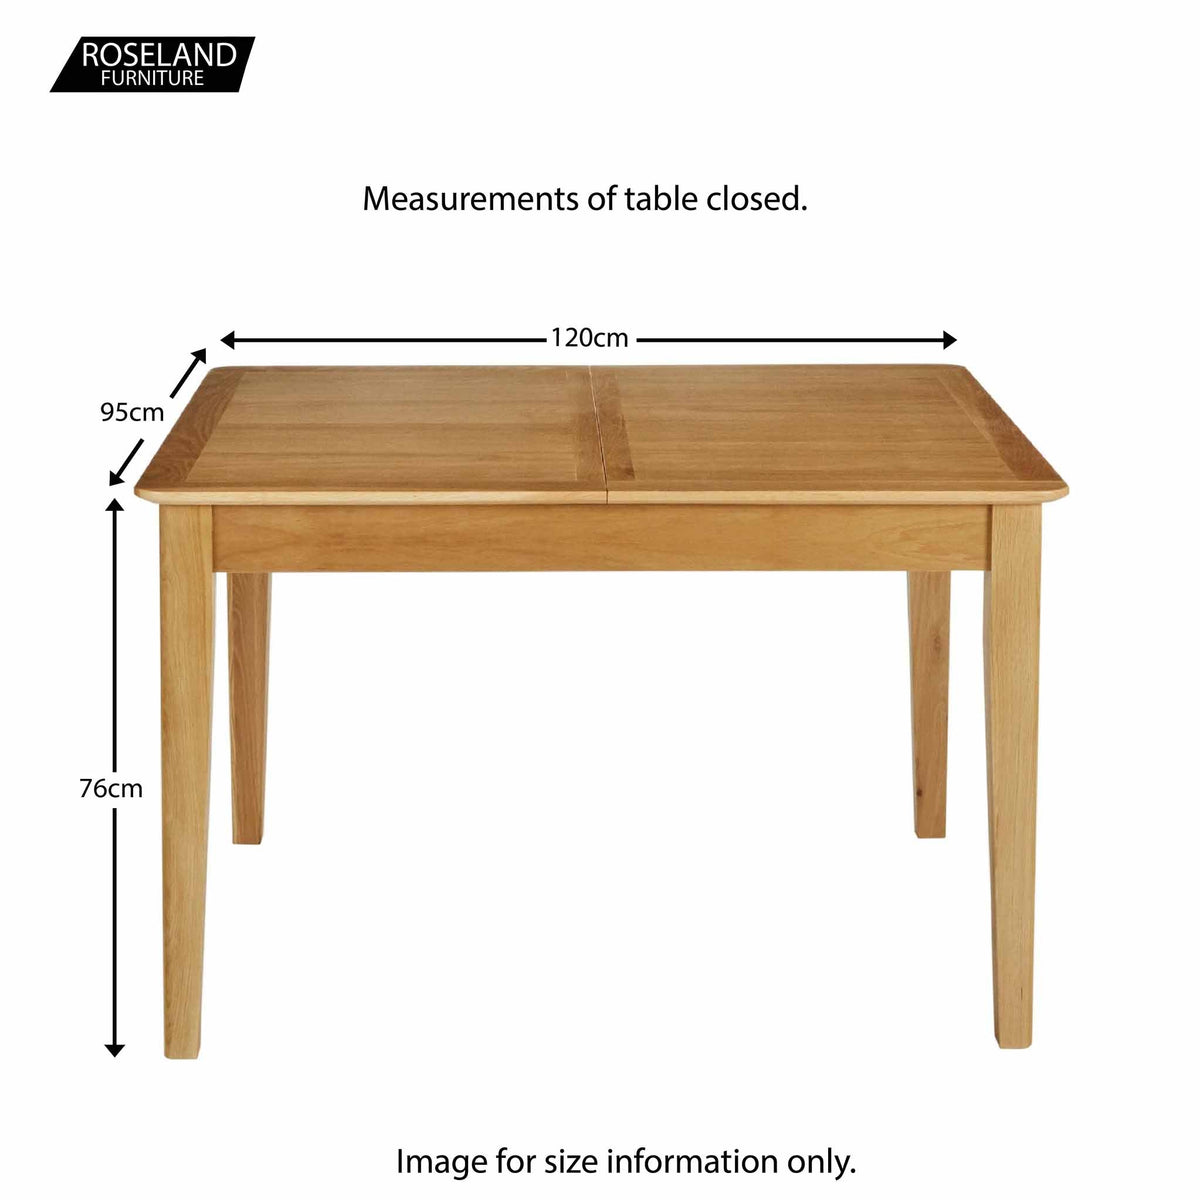 Alba Oak 120-160cm Extending Table - Size Guide when closed